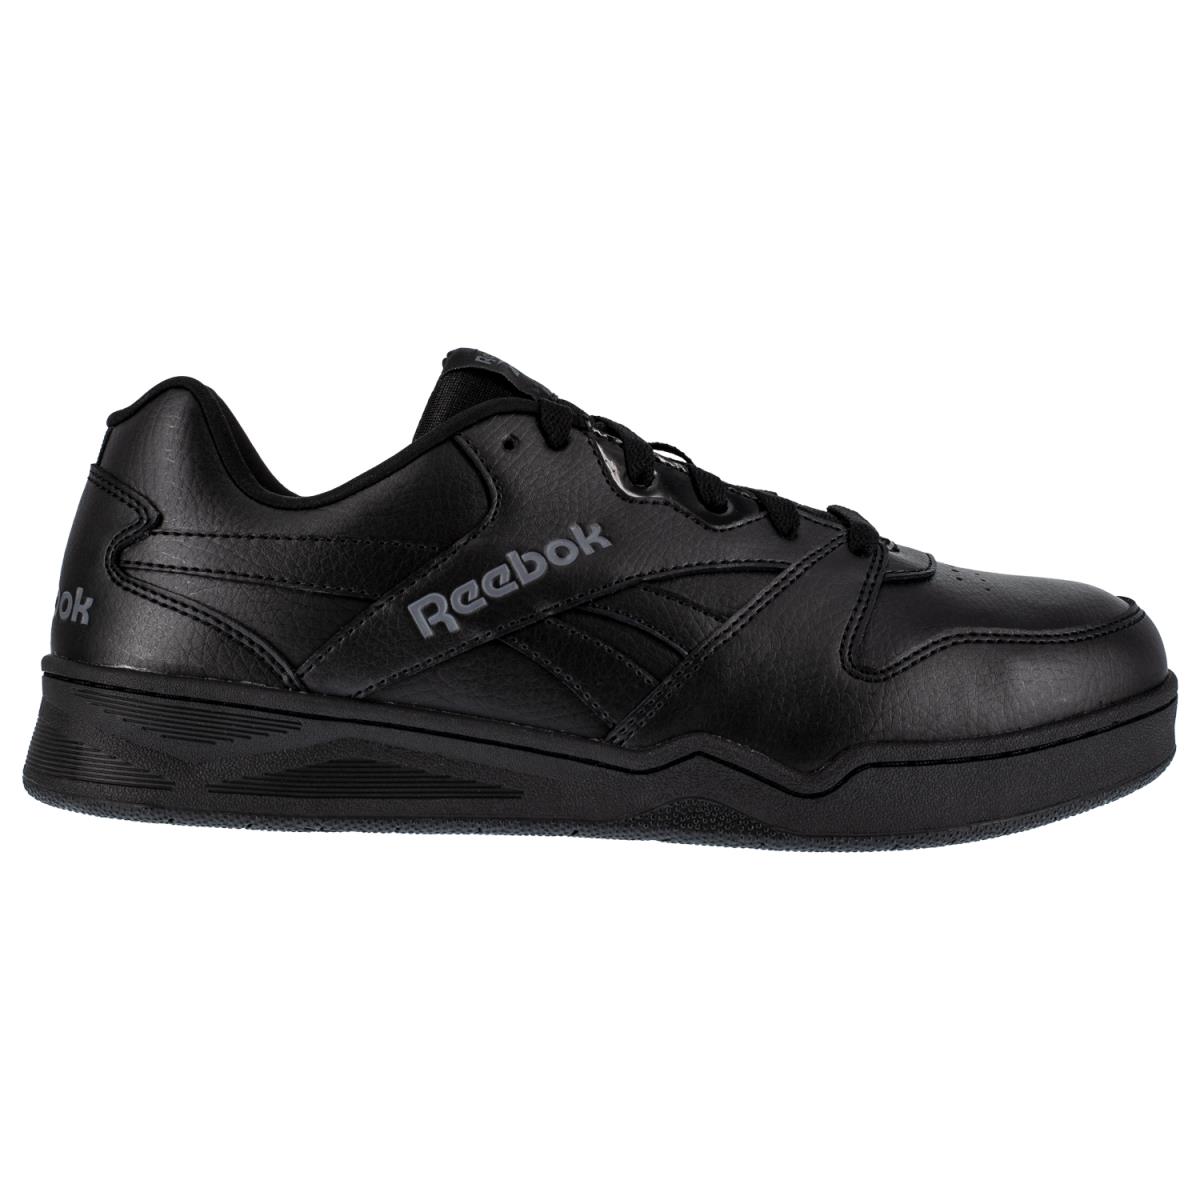 Reebok Womens Black Leather Work Shoes Low Cut Sneaker CT M